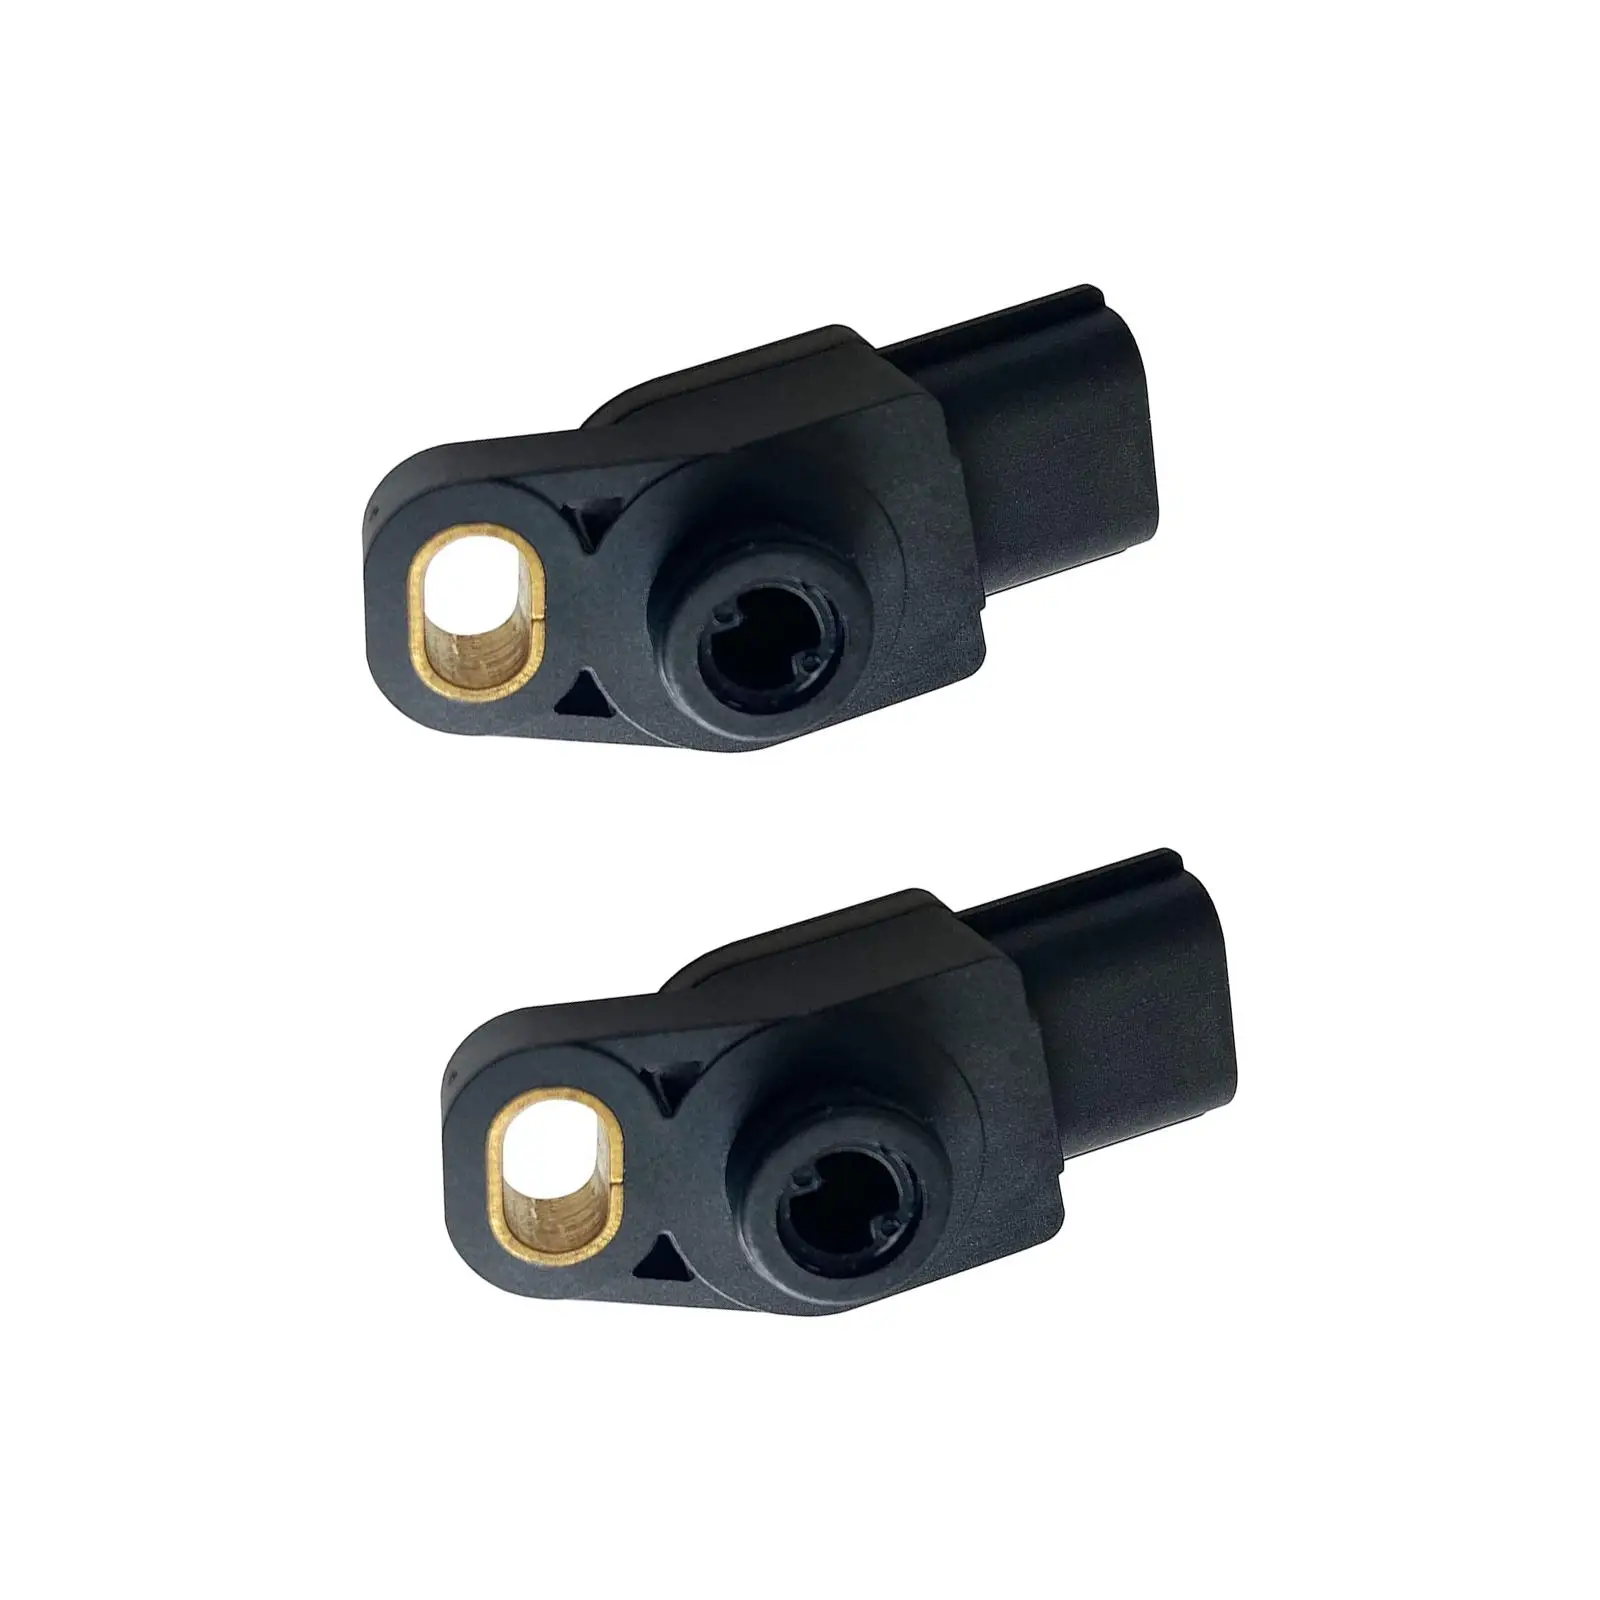 Throttle Position Sensor 13580-18G00 Sturdy Black Set of 2 for Suzuki Repairing